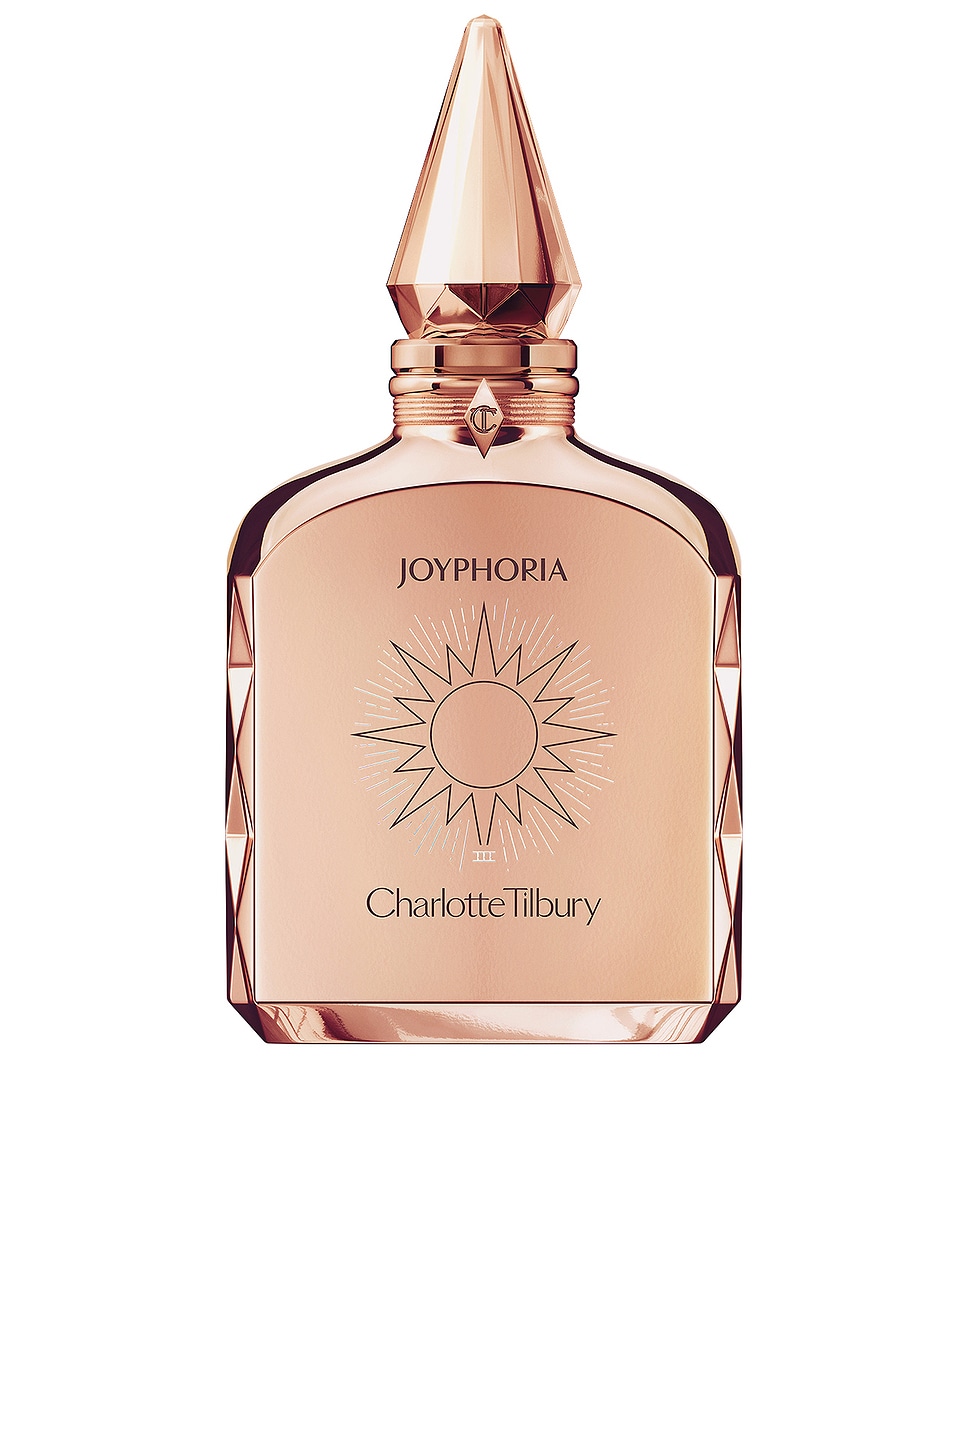 Joyphoria Fragrance in Beauty: NA